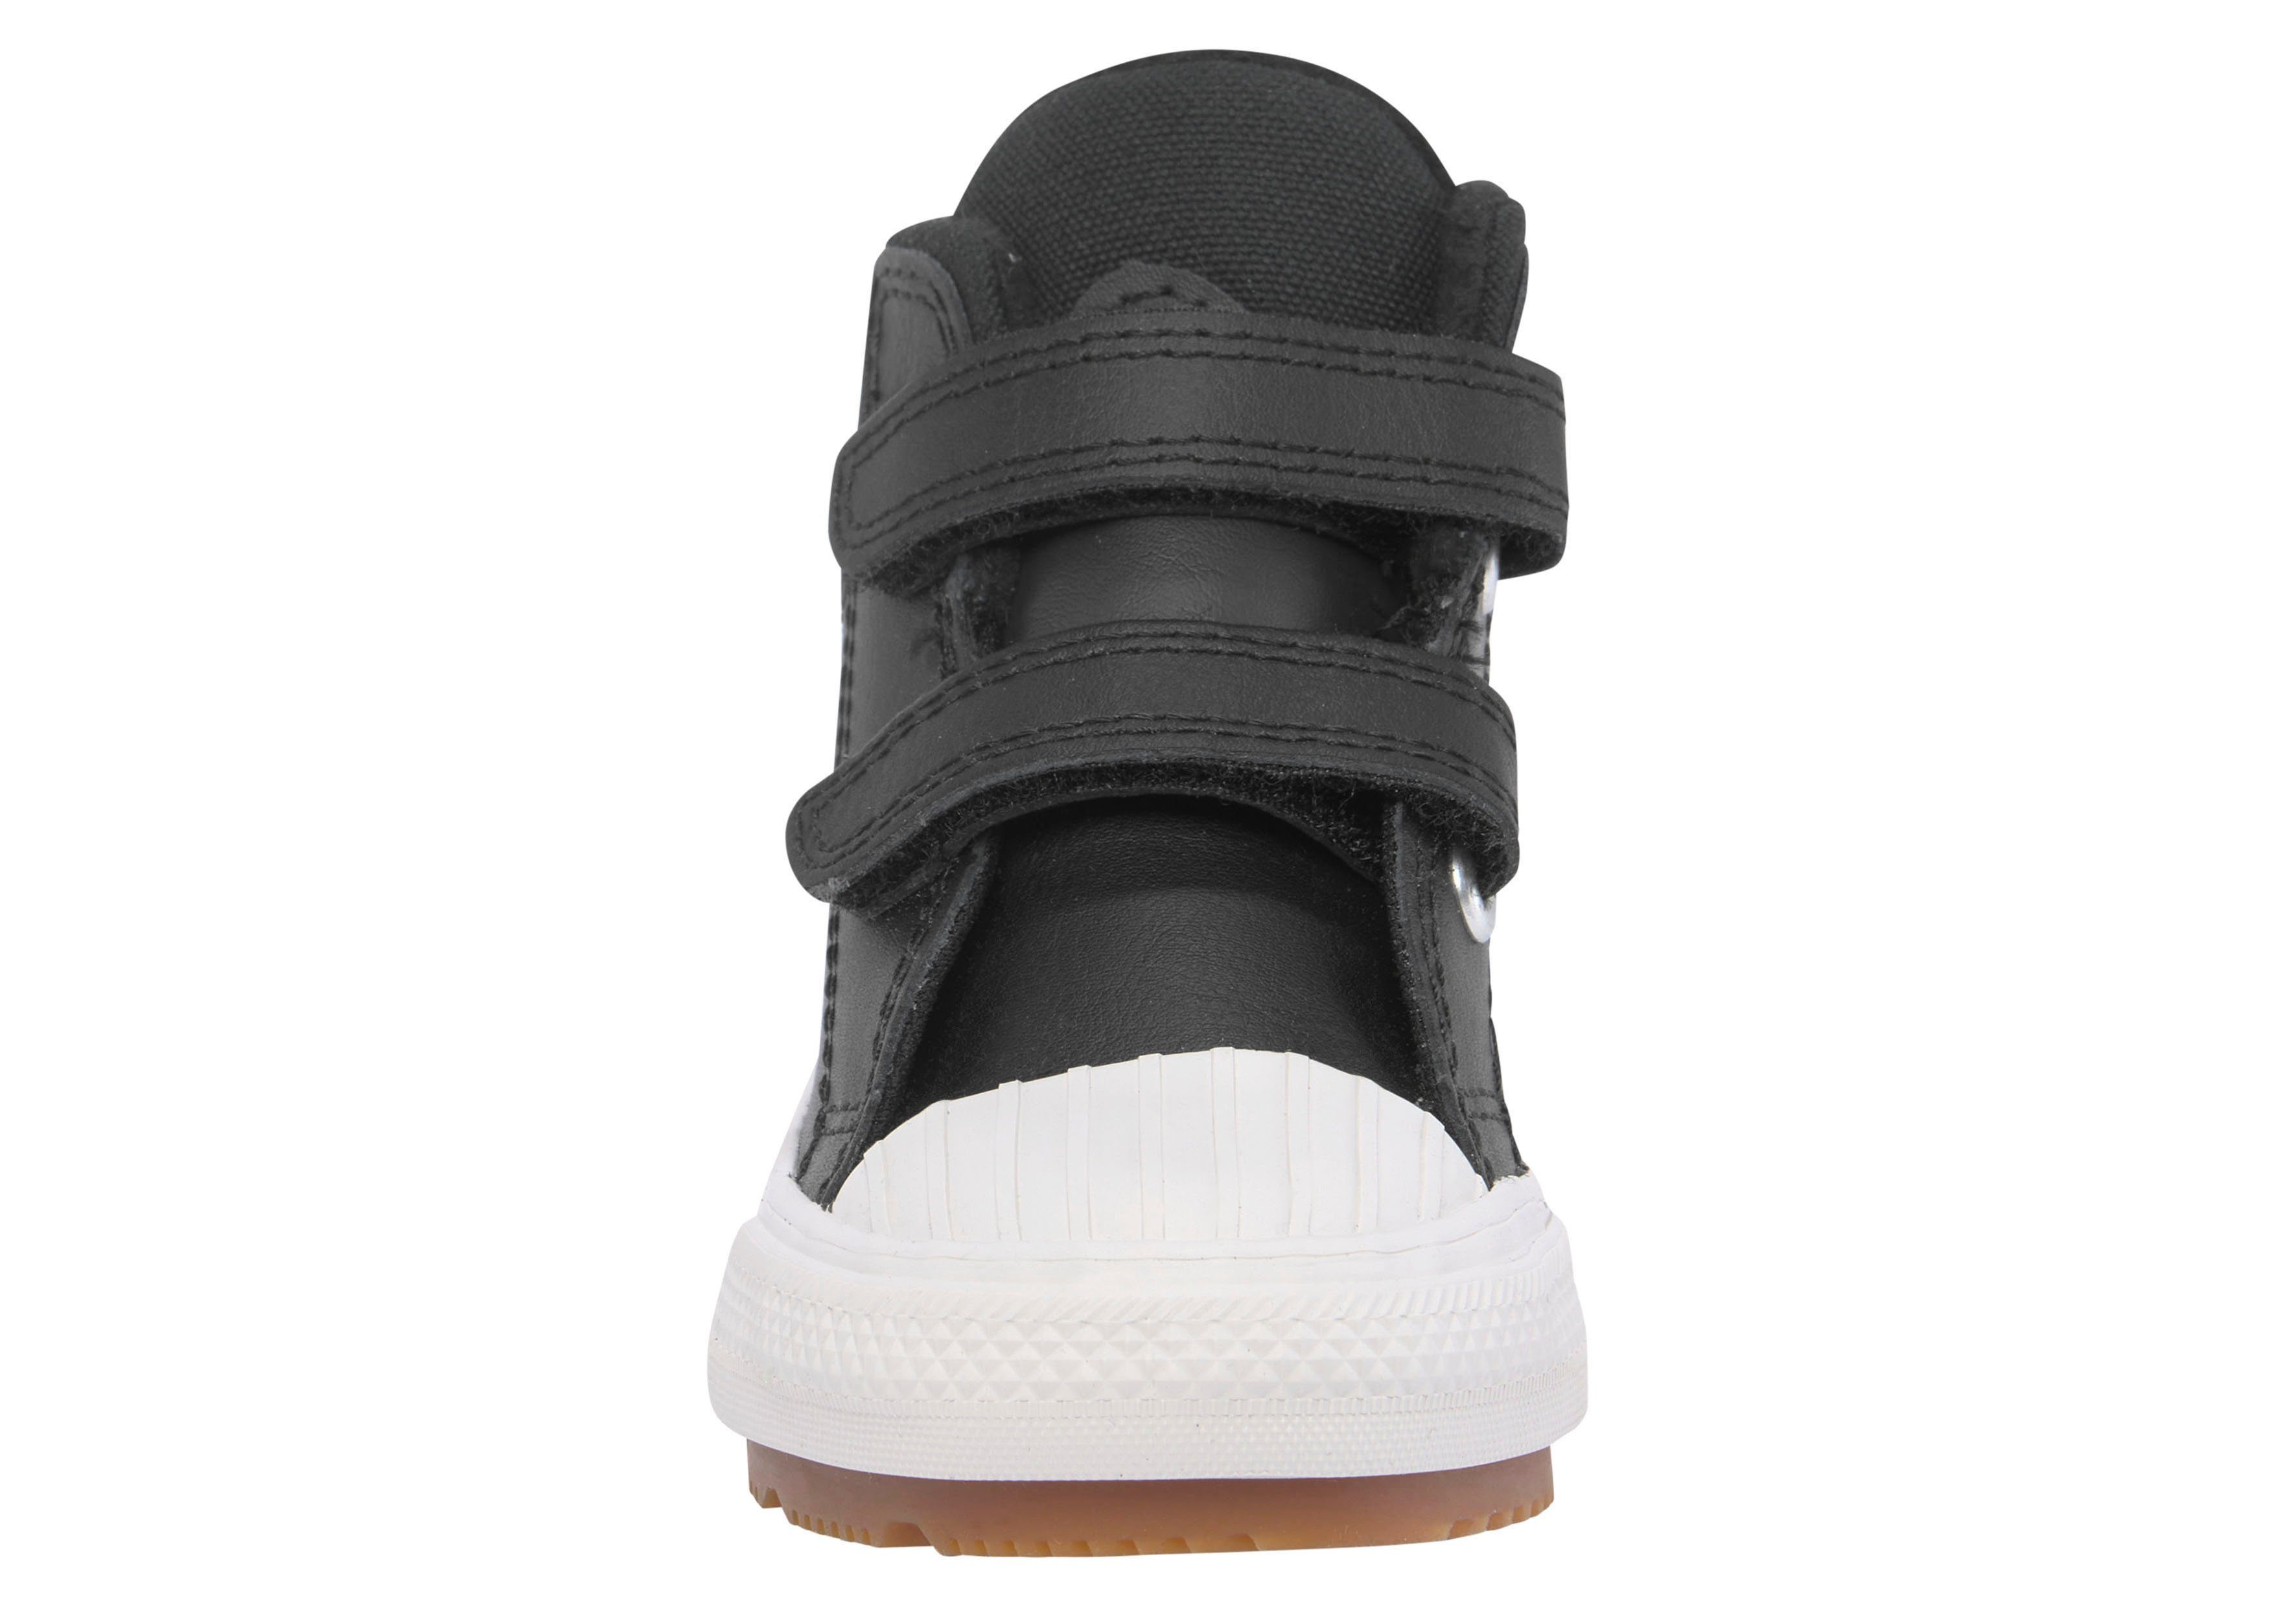 Converse CHUCK TAYLOR ALL STAR mit BOOT BERKSHIRE 2V schwarz LEATHER Klettverschluss Sneakerboots